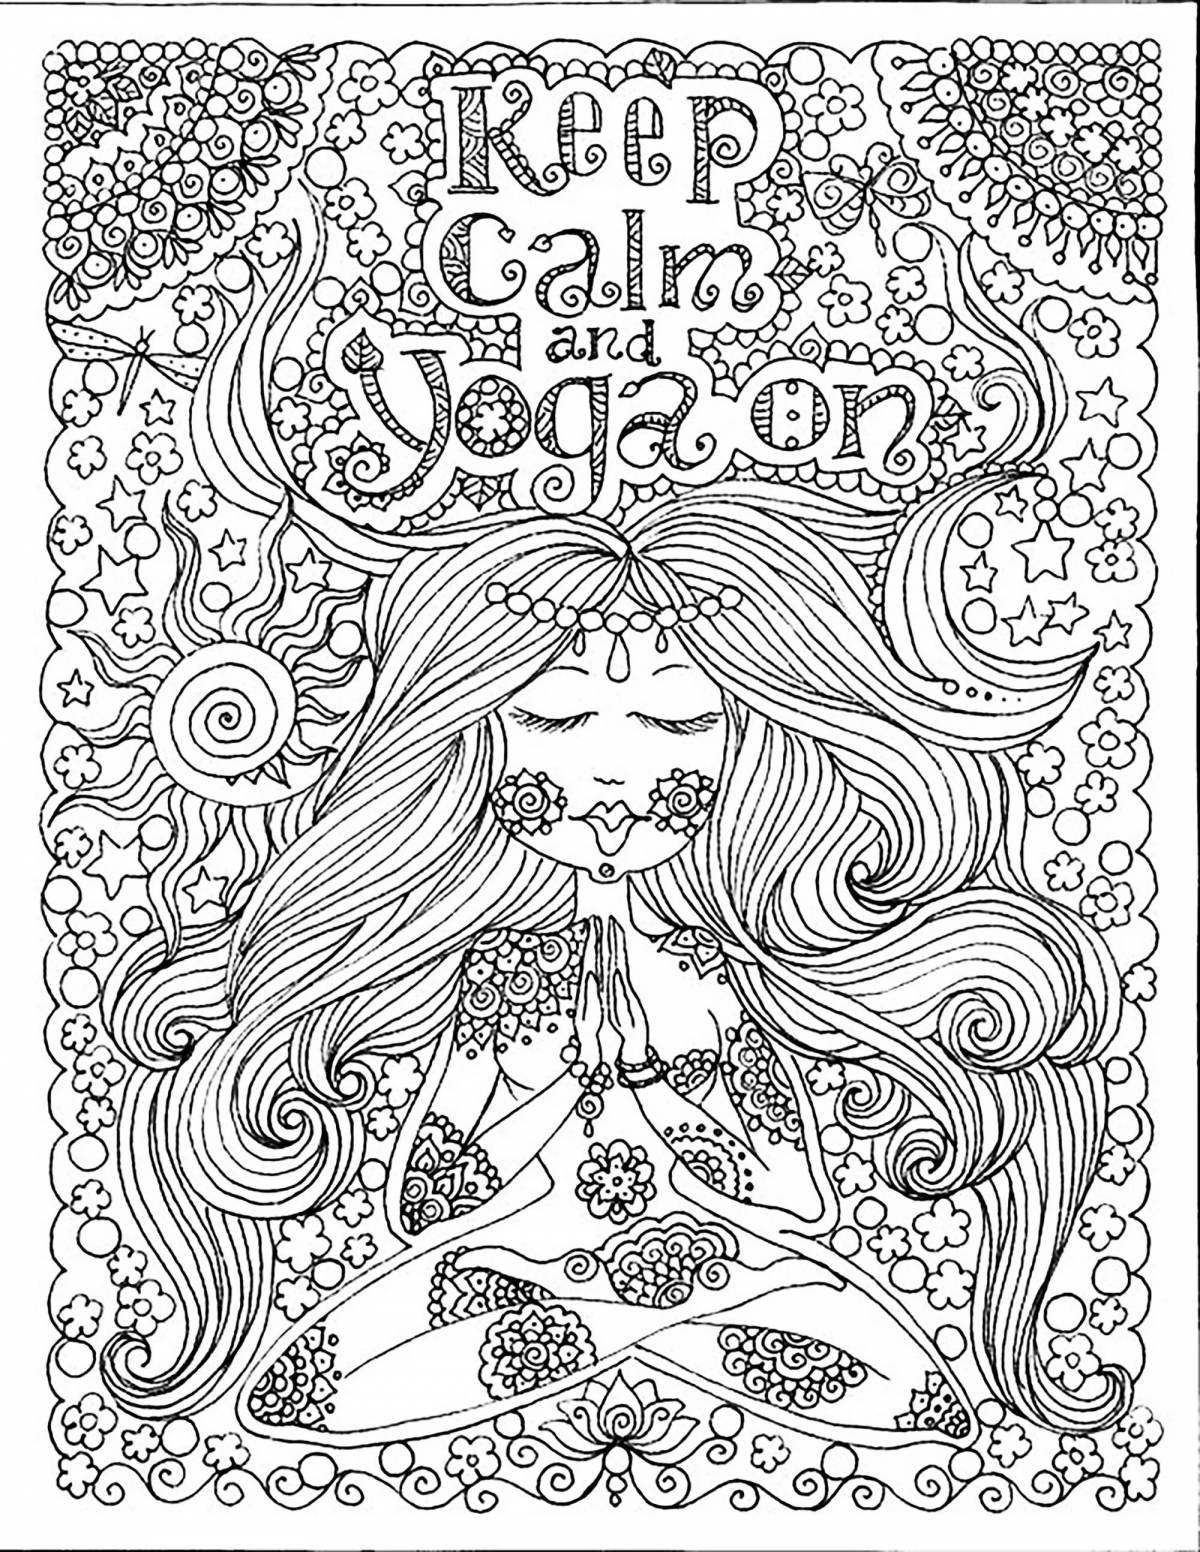 Inspirational antistress art yoga coloring book